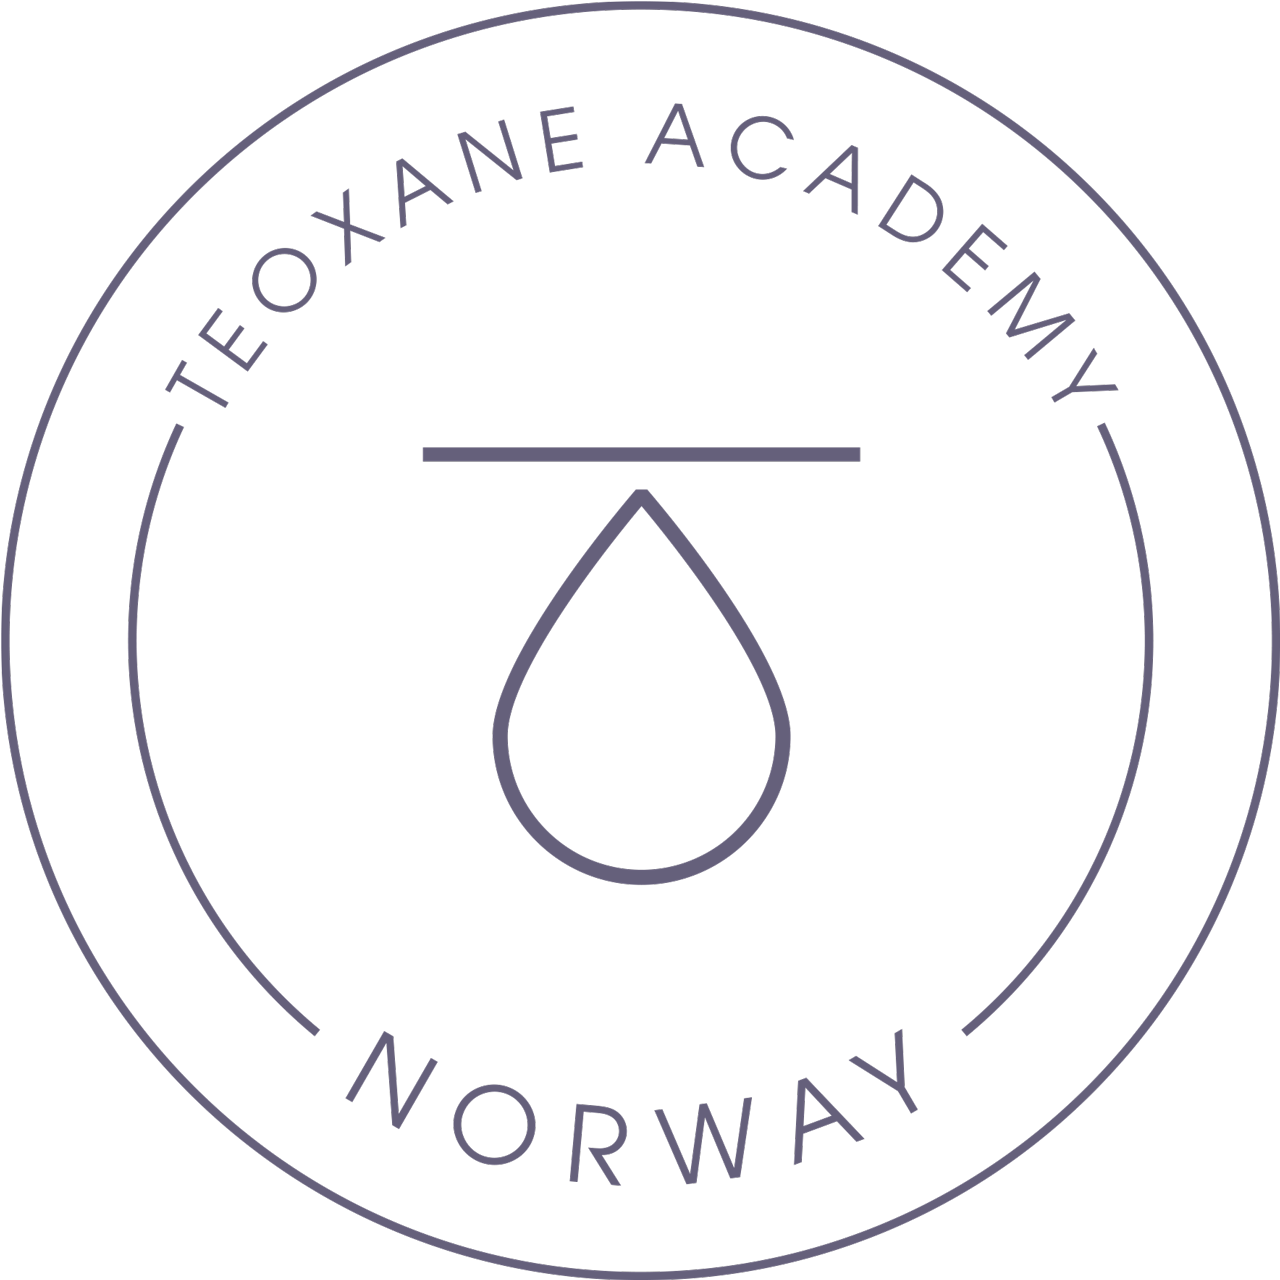 Teoxane Academy Norway logo